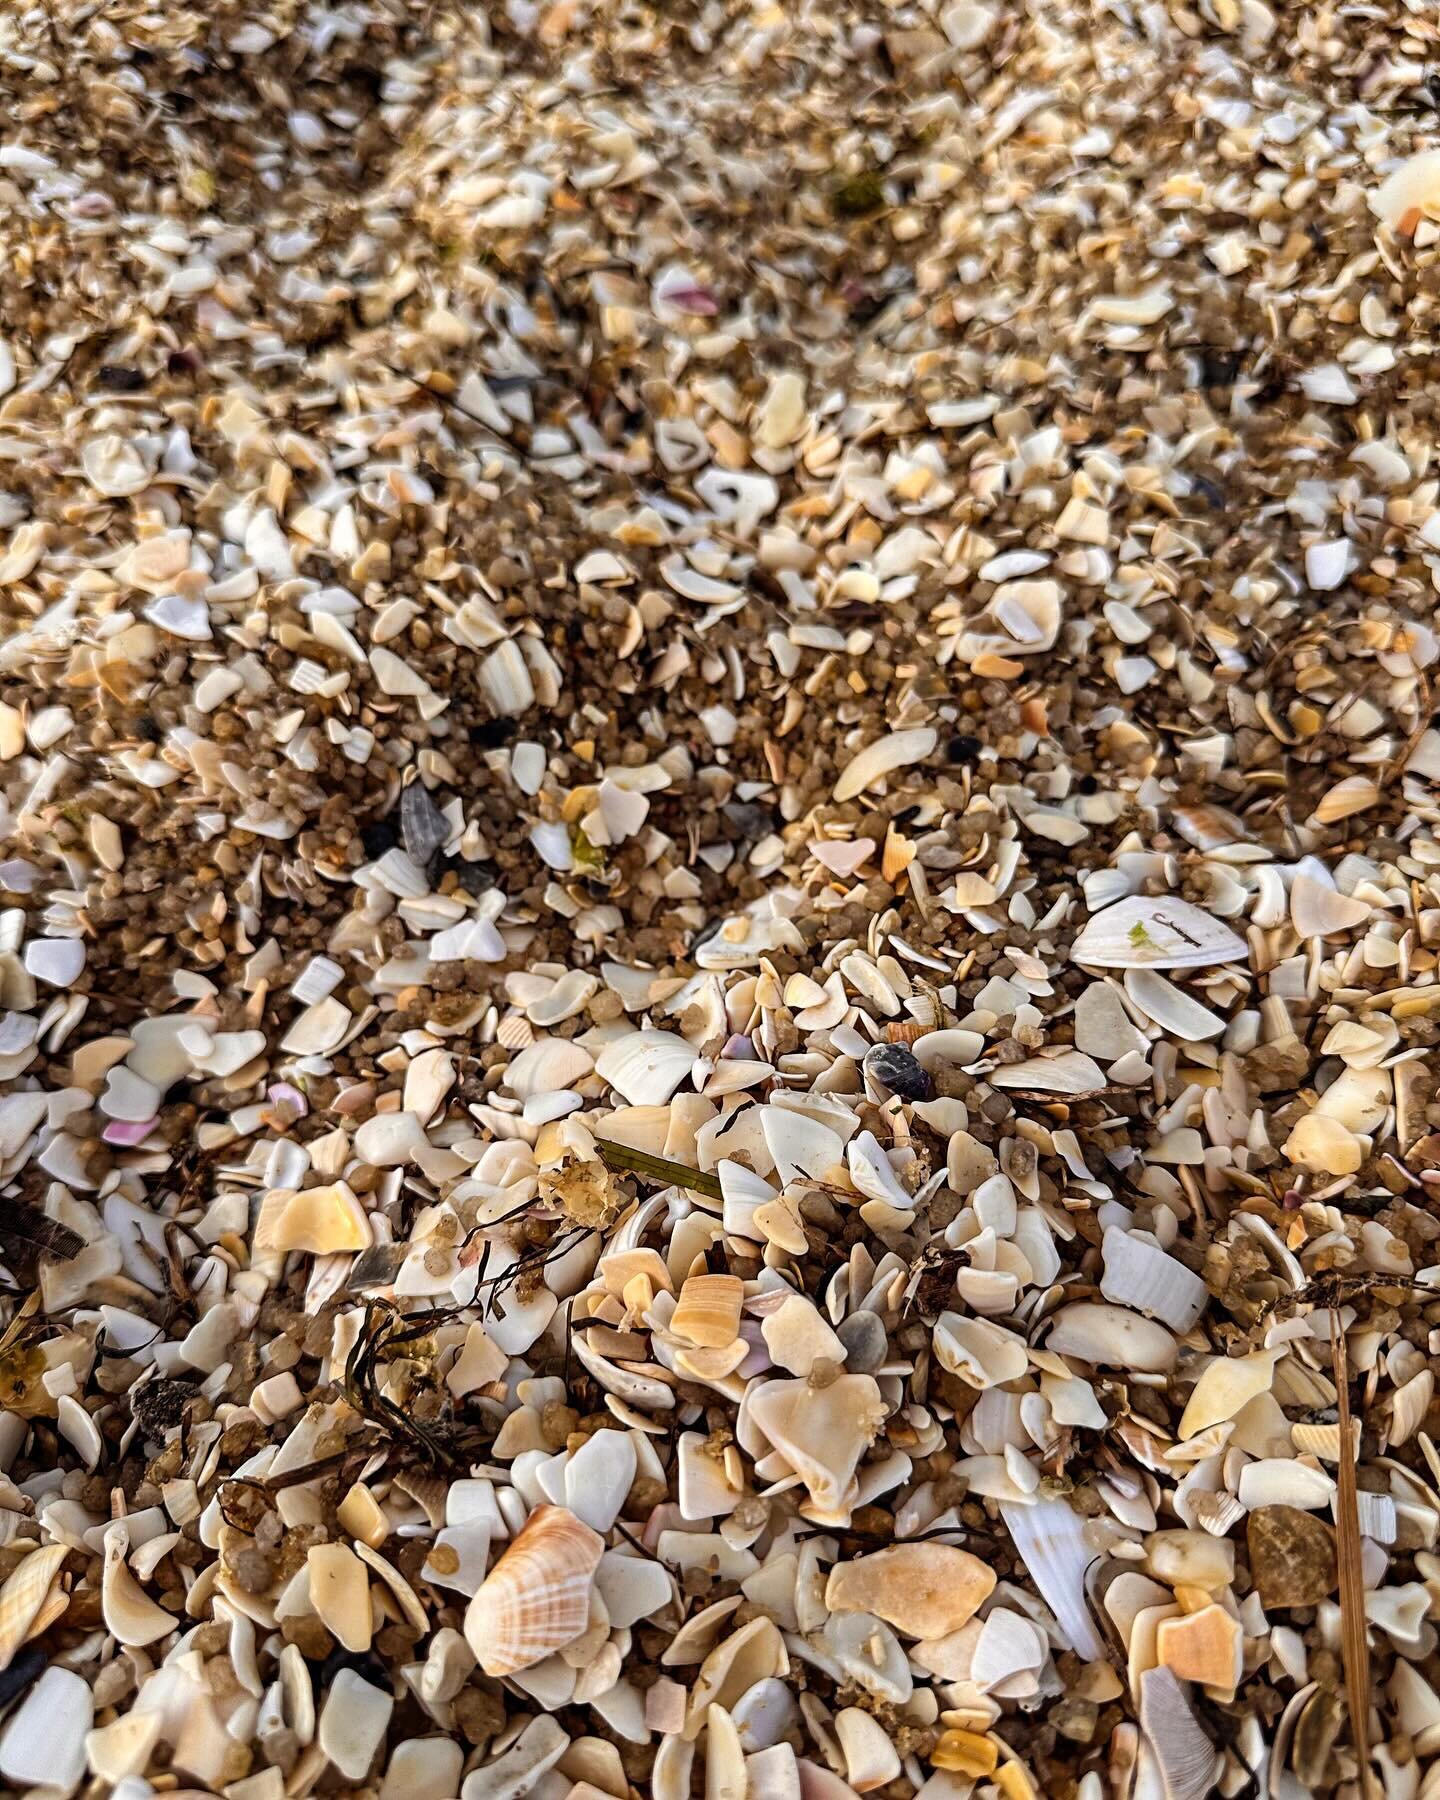 Shells. So many crafting possibilities here. 🐚

#seashellsbytheseashore #shells #coastalliving #melbournelife #beachlife #shells🐚